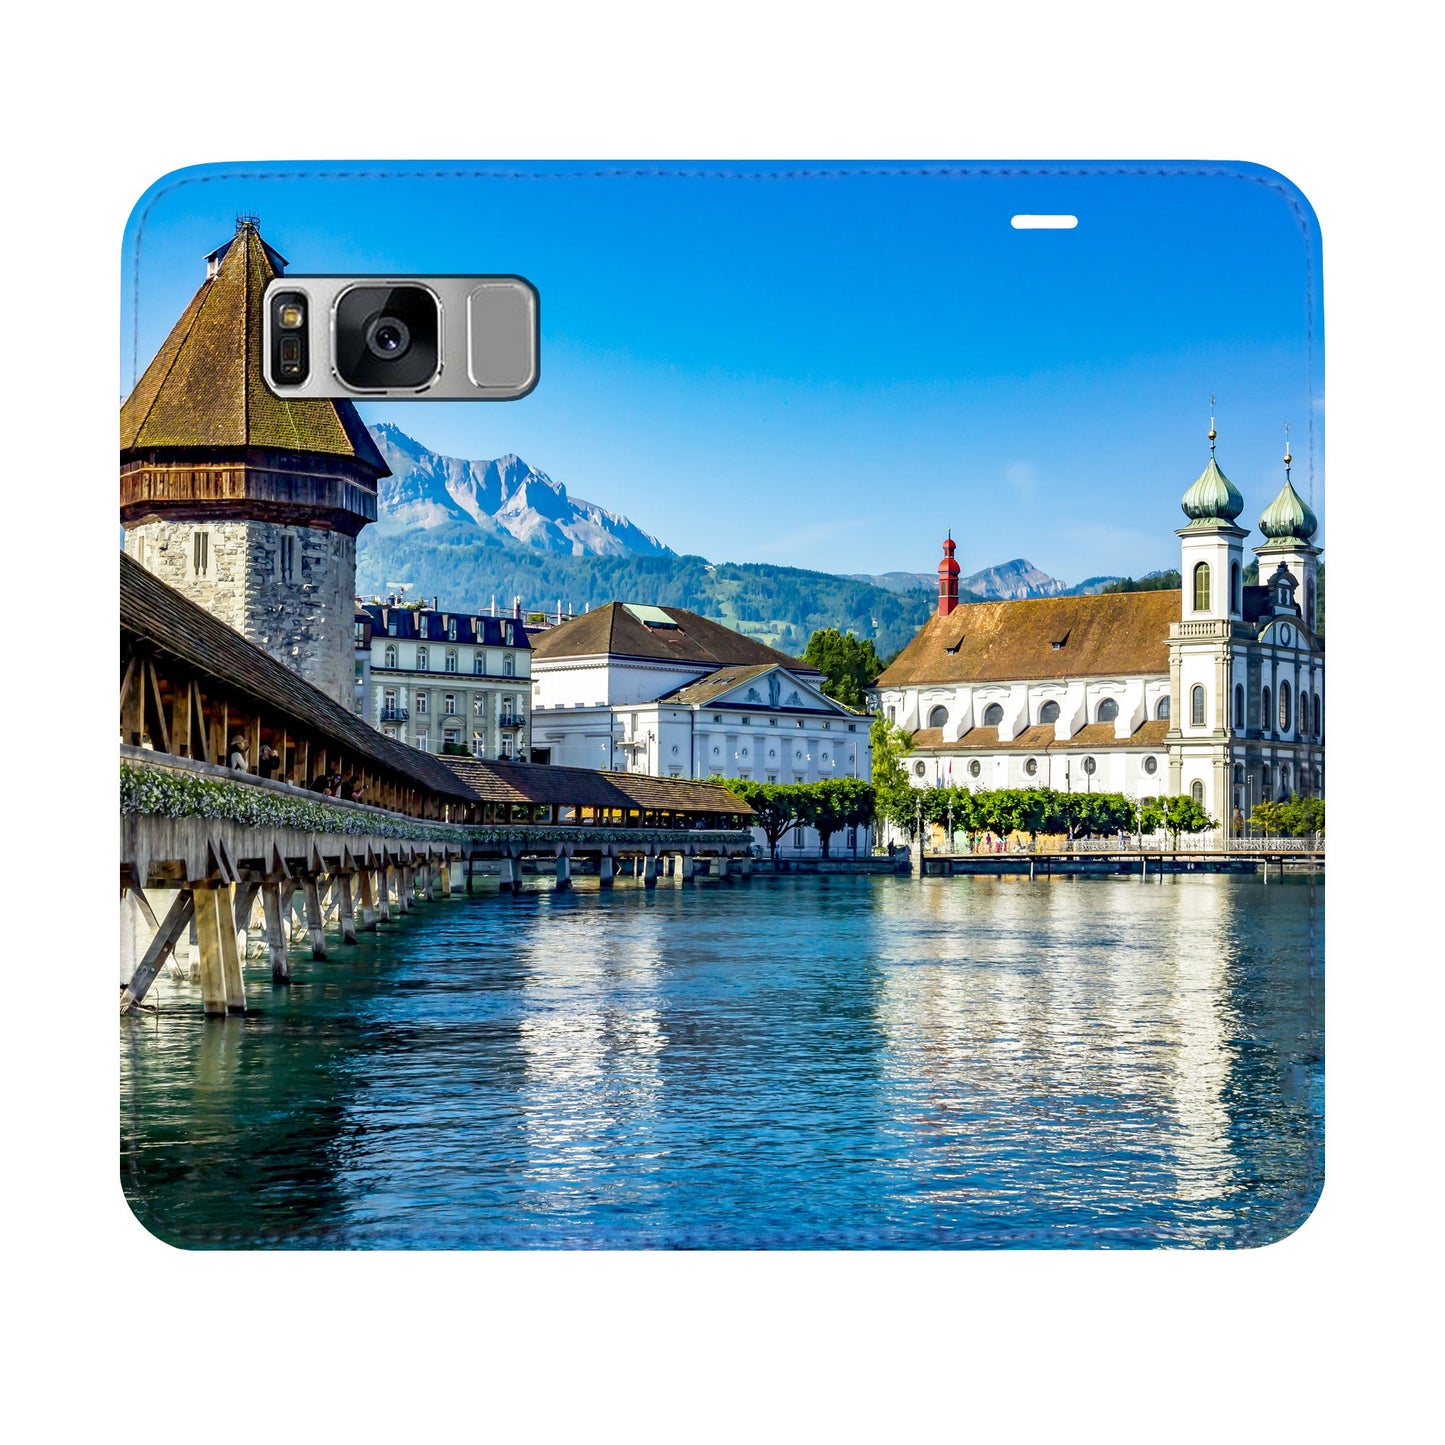 Coque Lucerne City Panorama pour Samsung Galaxy S8